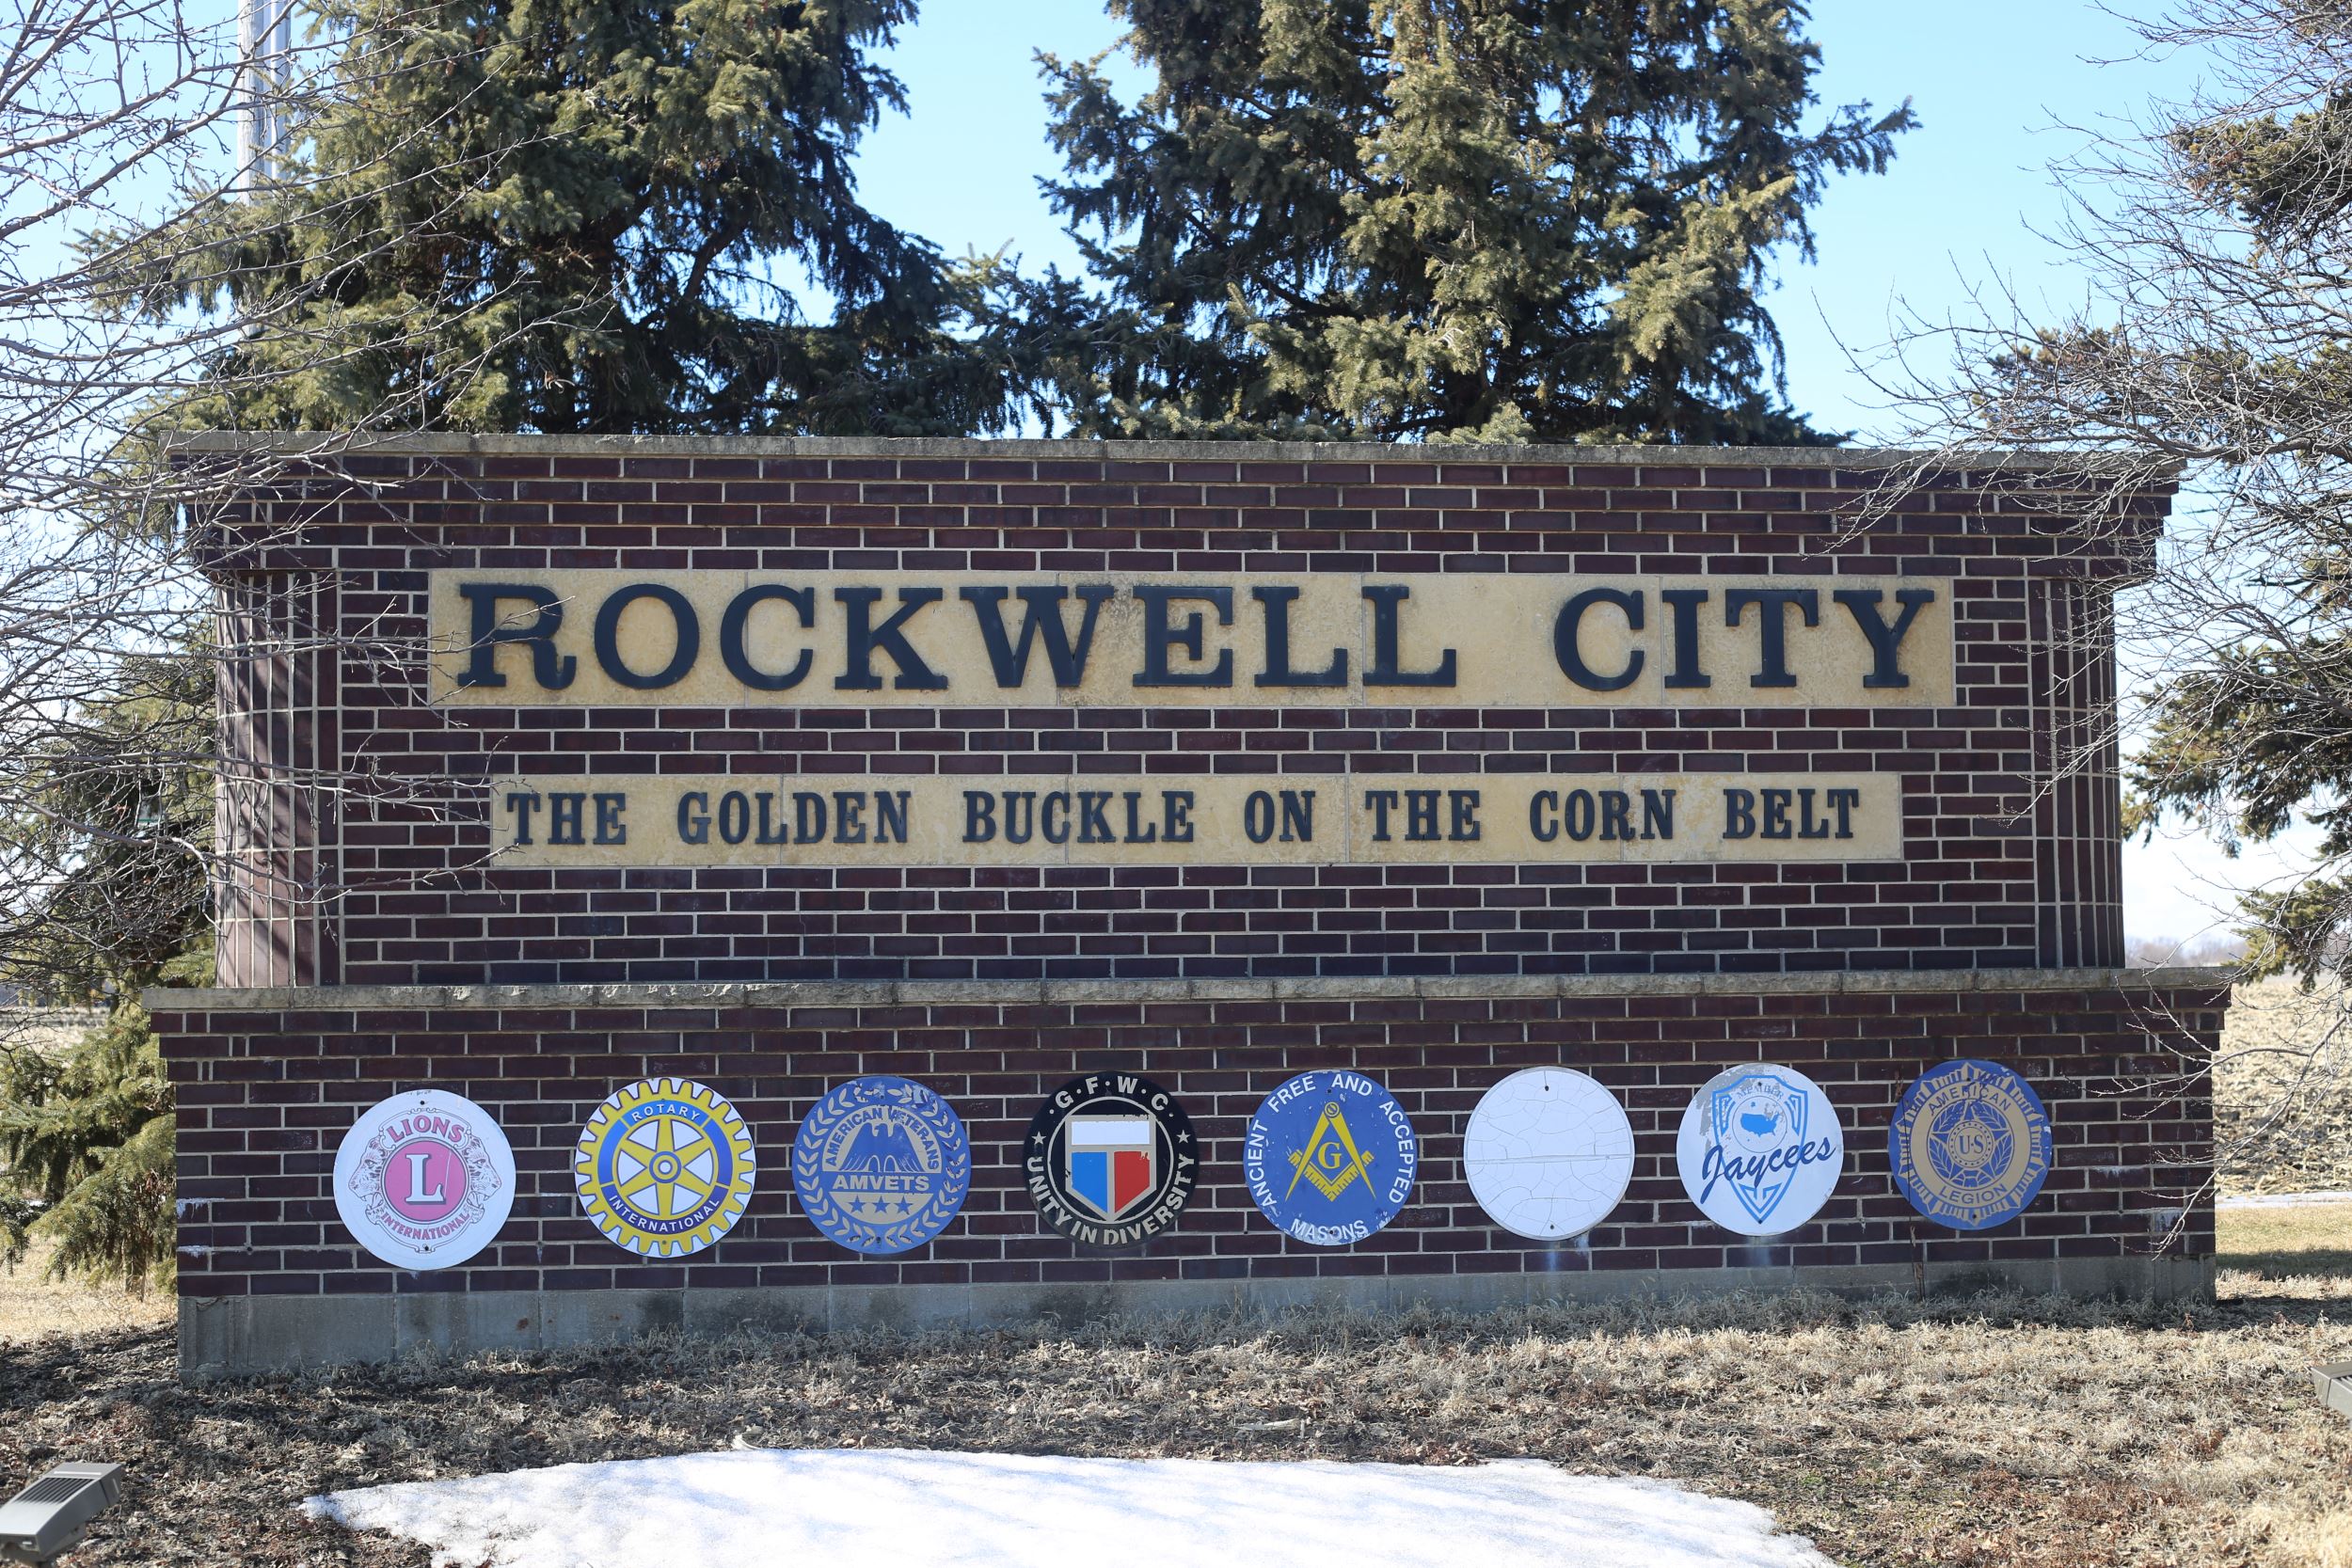 Rockwelel City